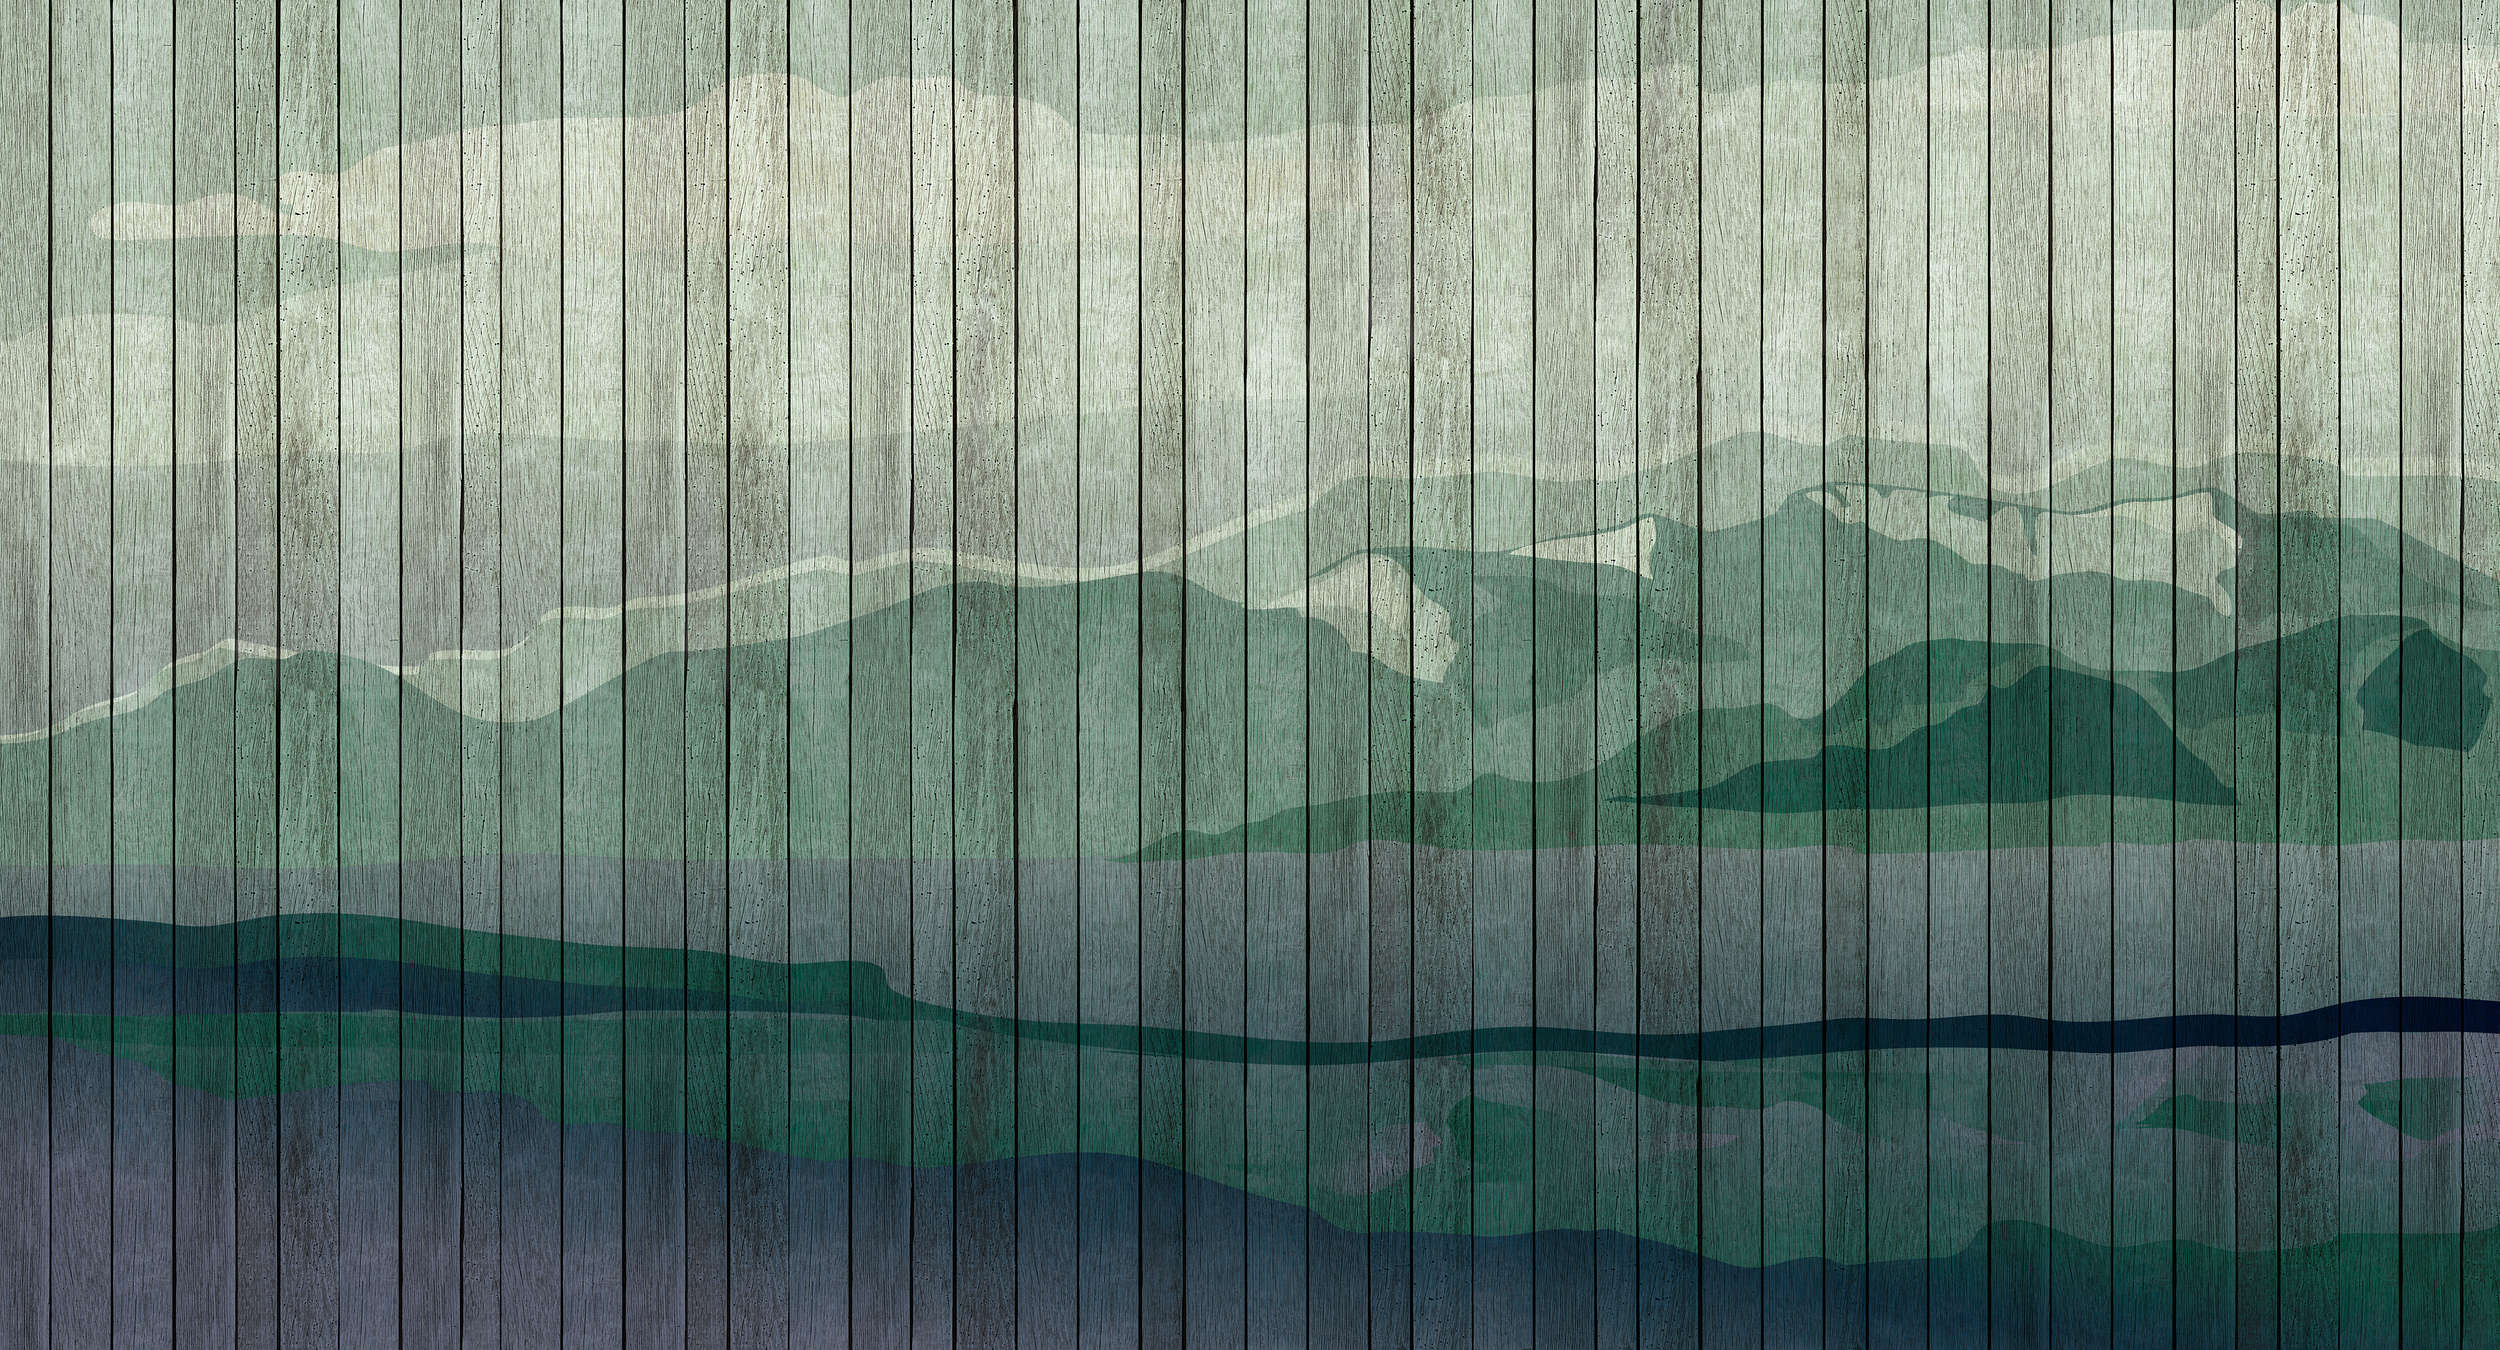             Mountains 3 - Modern Wallpaper Mountain Landscape & Board Optics - Blue, Green | Matt Smooth Non-woven
        